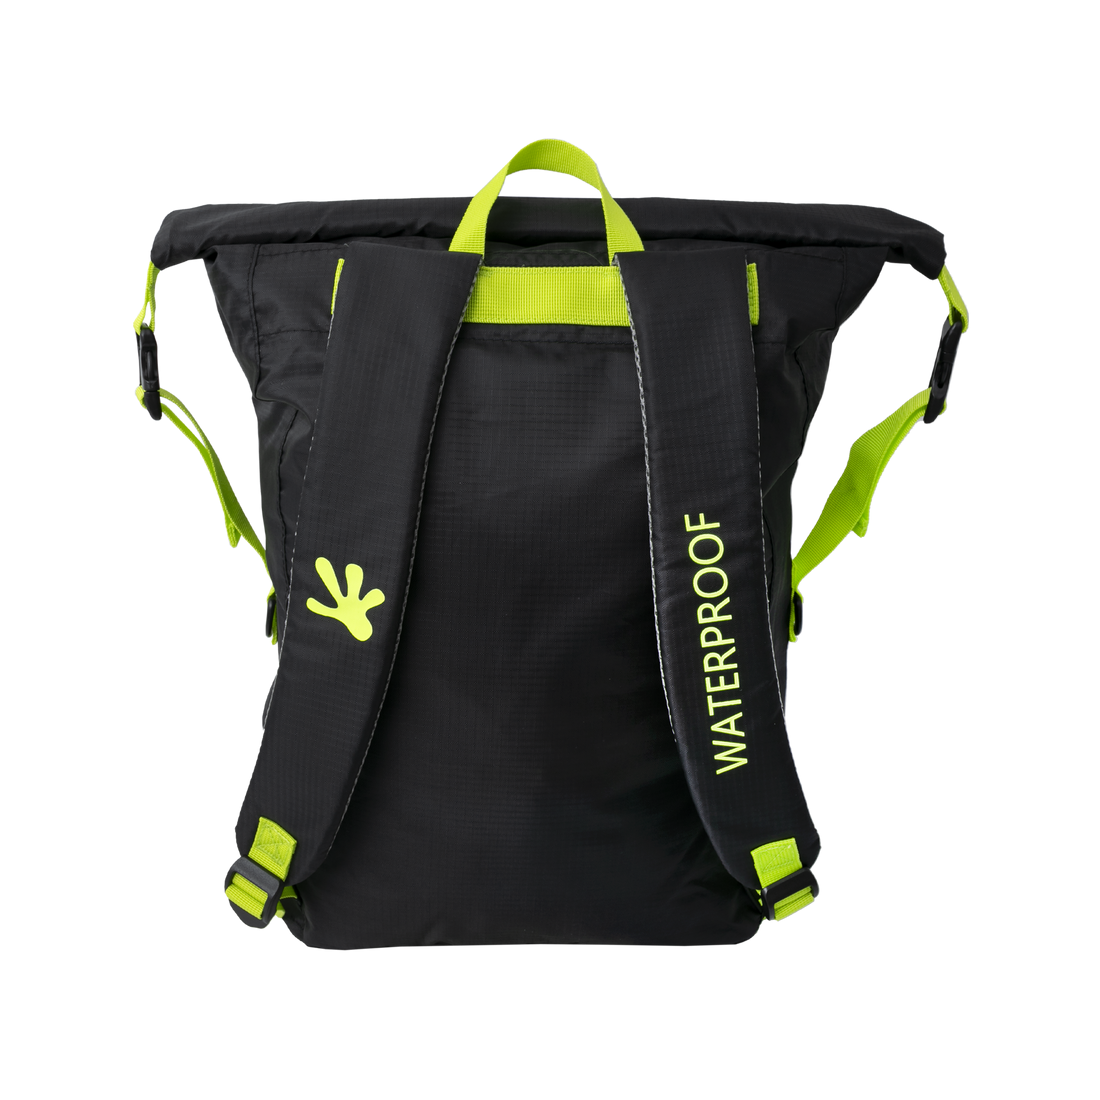 Lightweight WP Backpack - Black/Neon Green